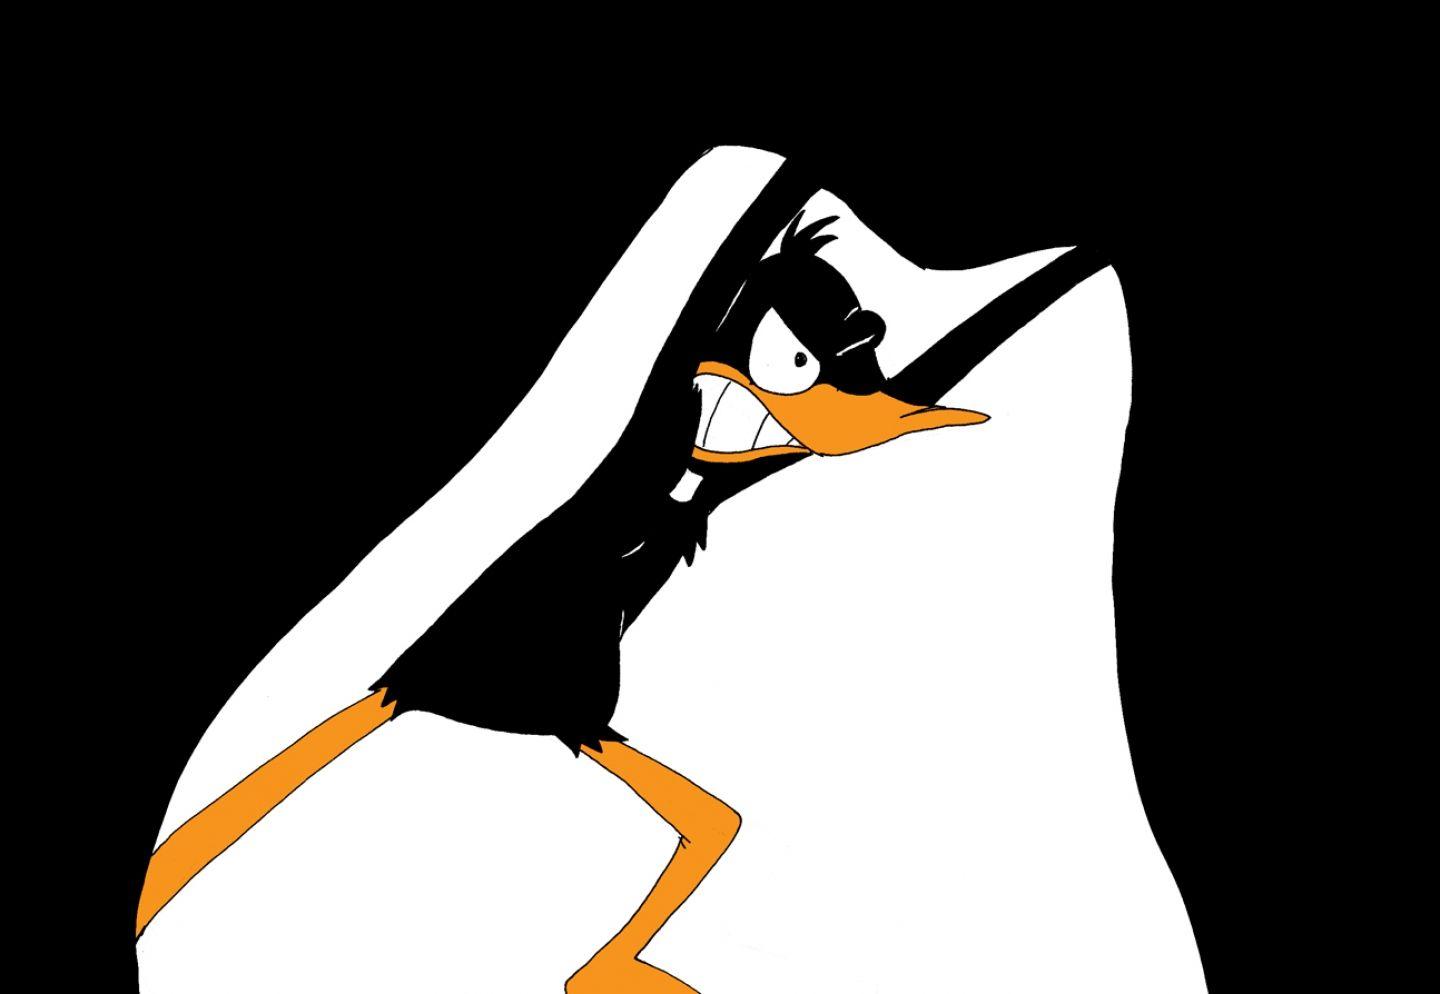 Daffy Duck Wallpaper. Daffy Duck Background